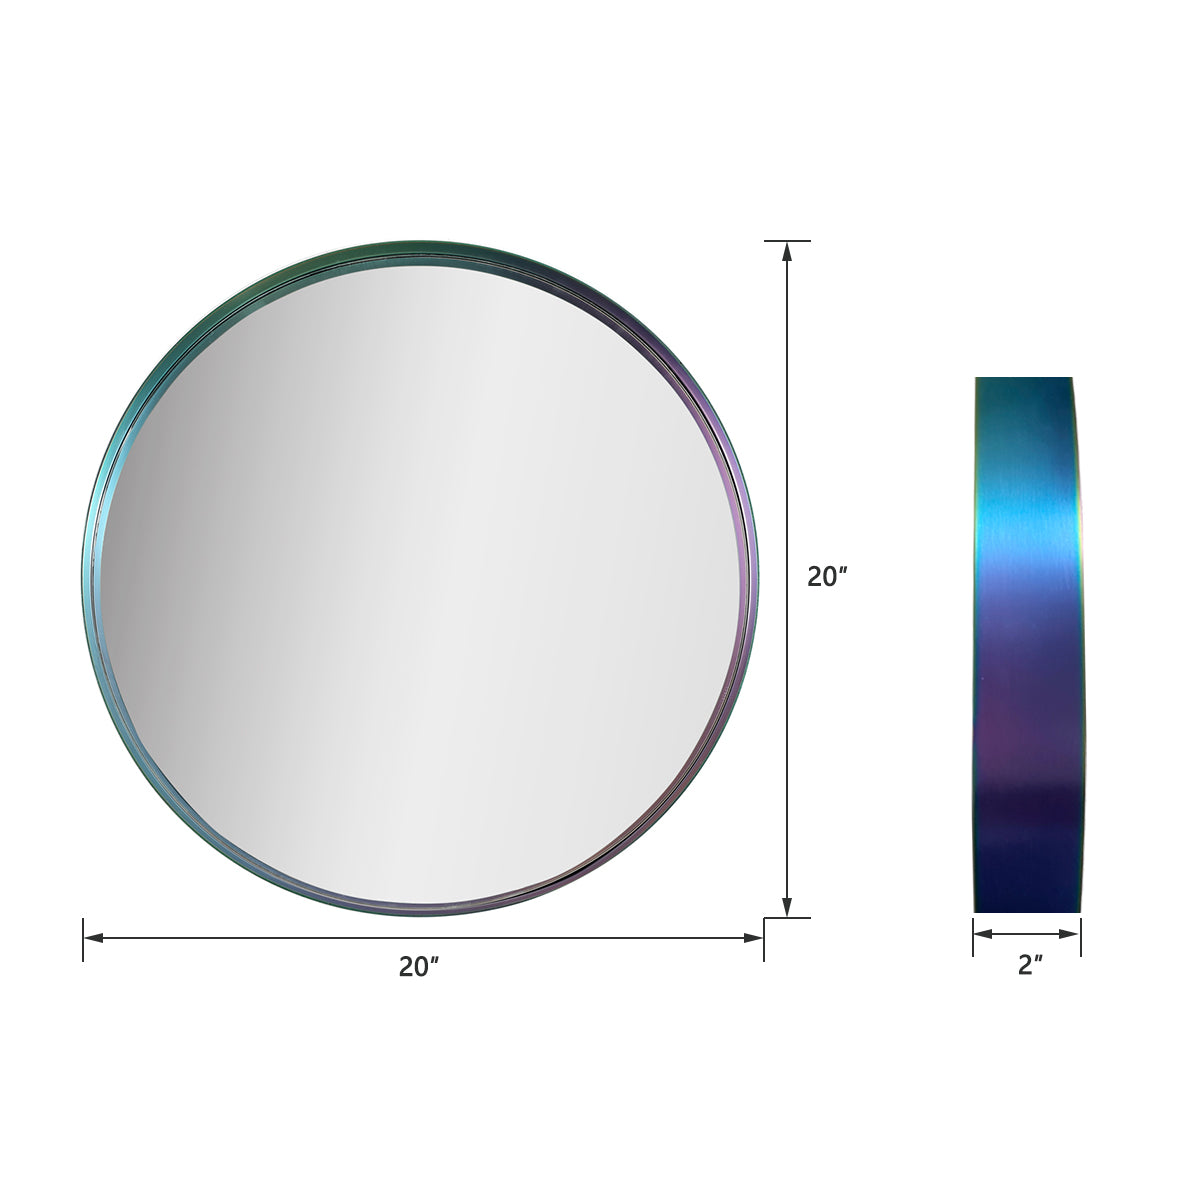 MacLuu Round Iridescent Stainless Steel Frame Wall Mirror